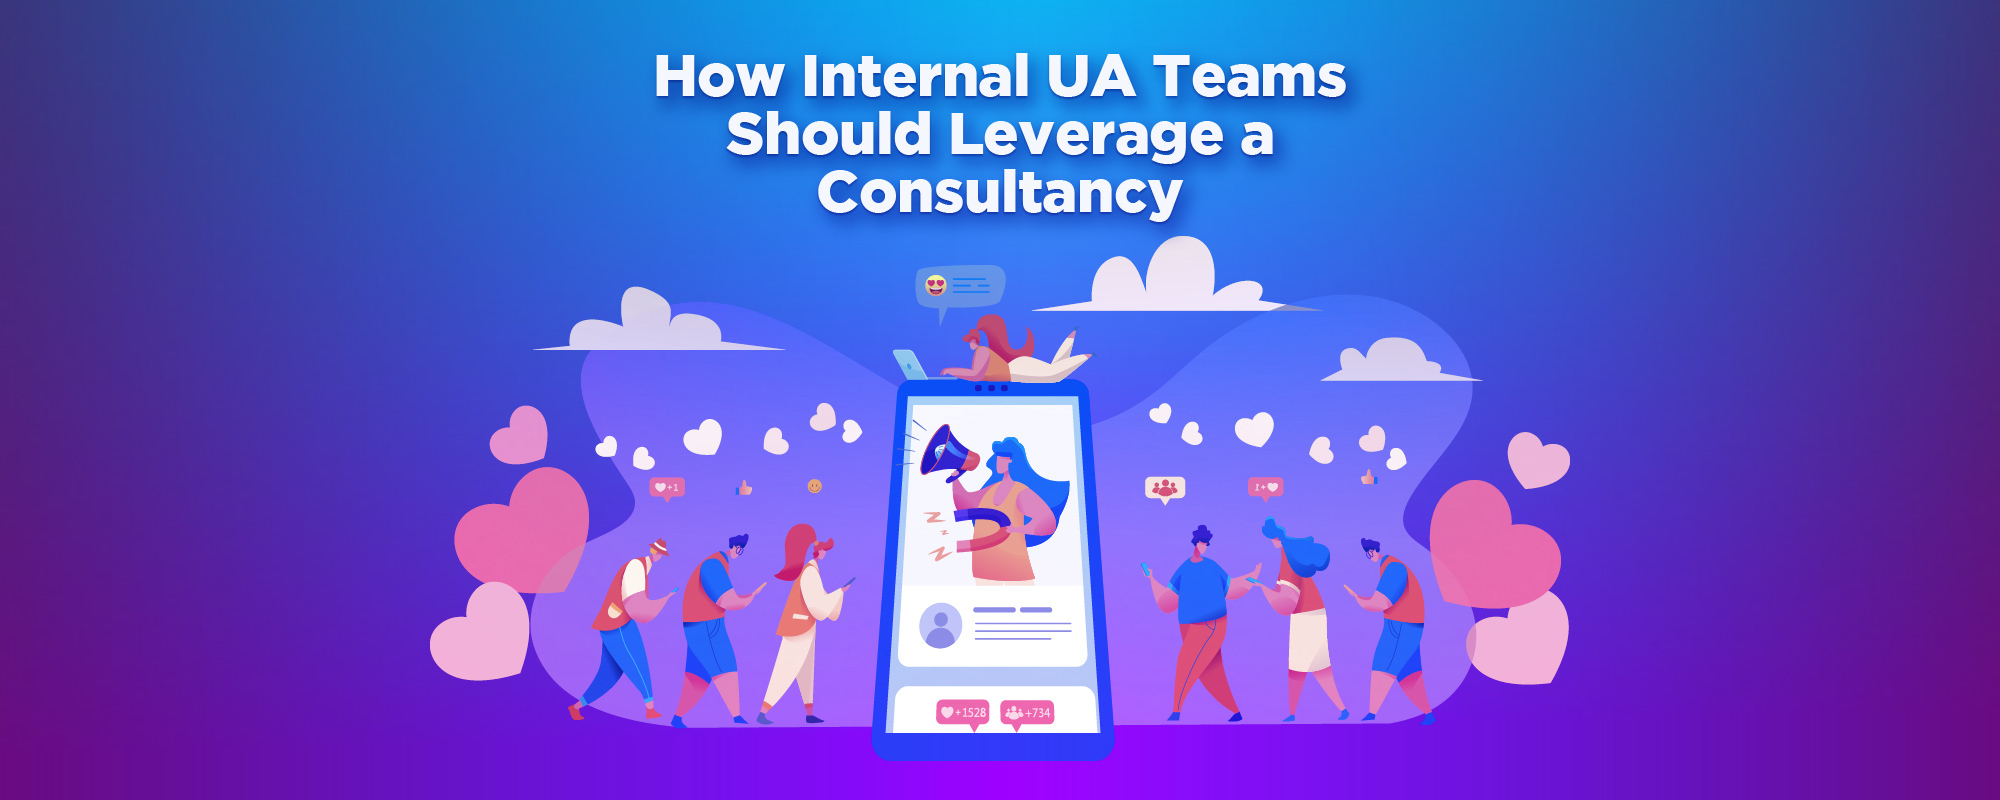 How Internal UA Teams Should Leverage a Consultancy